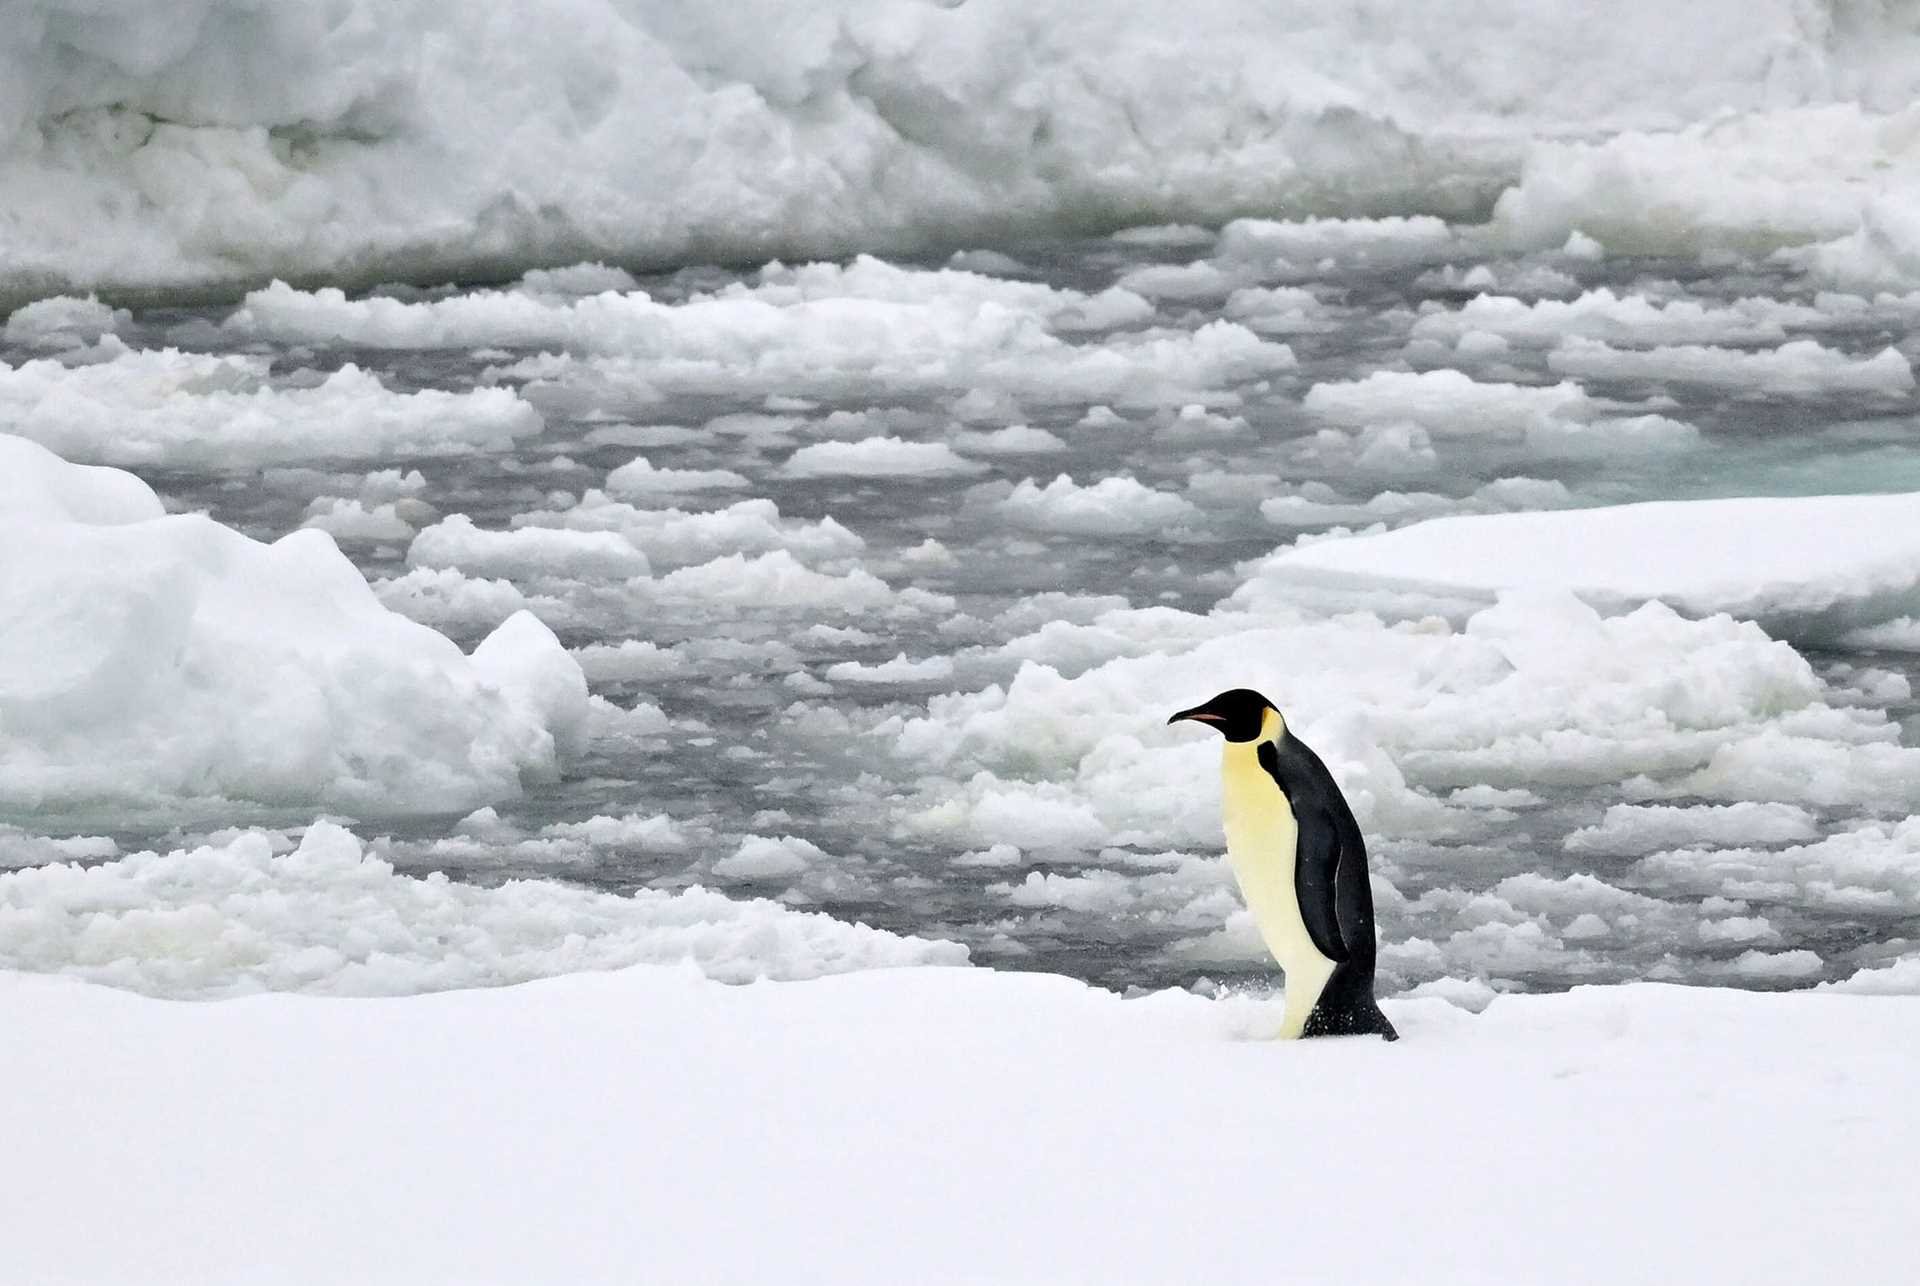 emperor penguin on an ice floe